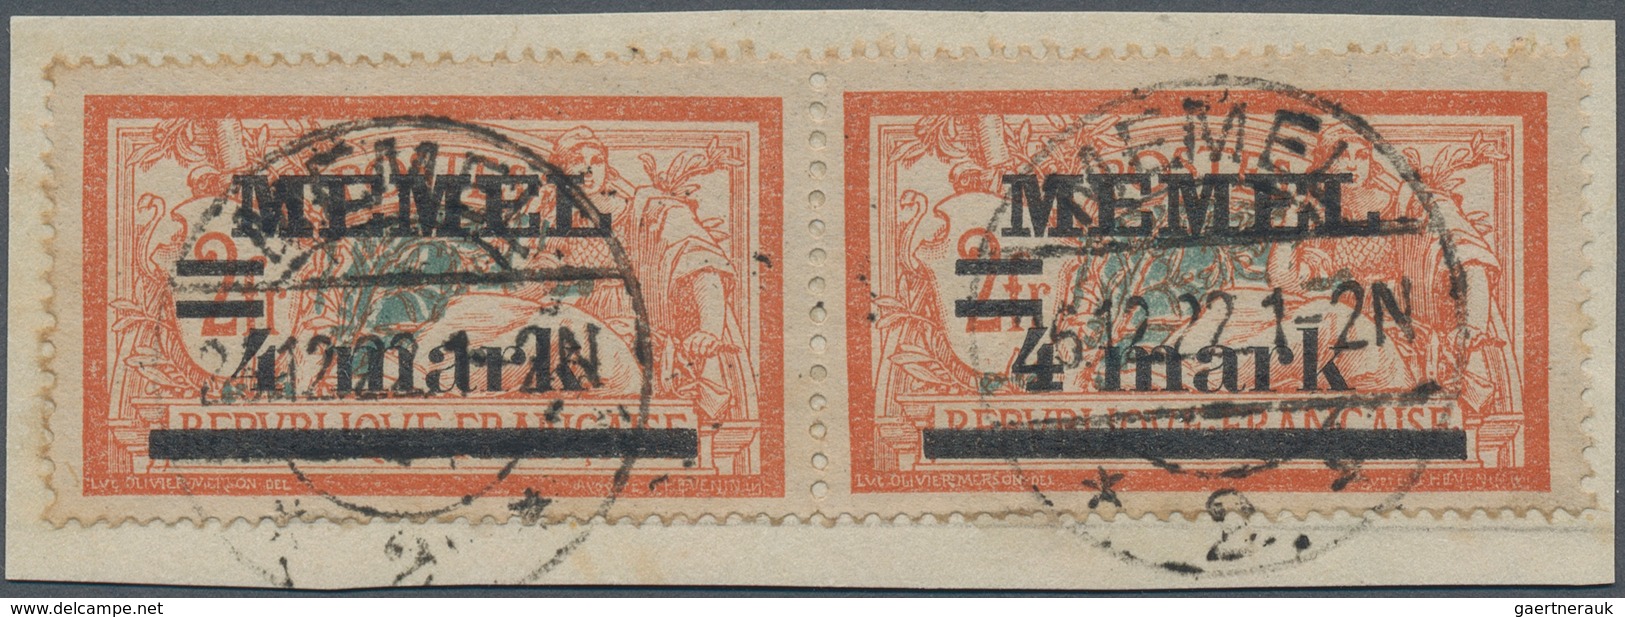 Memel: 1922. 4 Mark Abart: "dicke 4", Sauber Gestempeltes Qualitätsstück Der Seltenen Marke, Gepr. I - Memel (Klaipeda) 1923